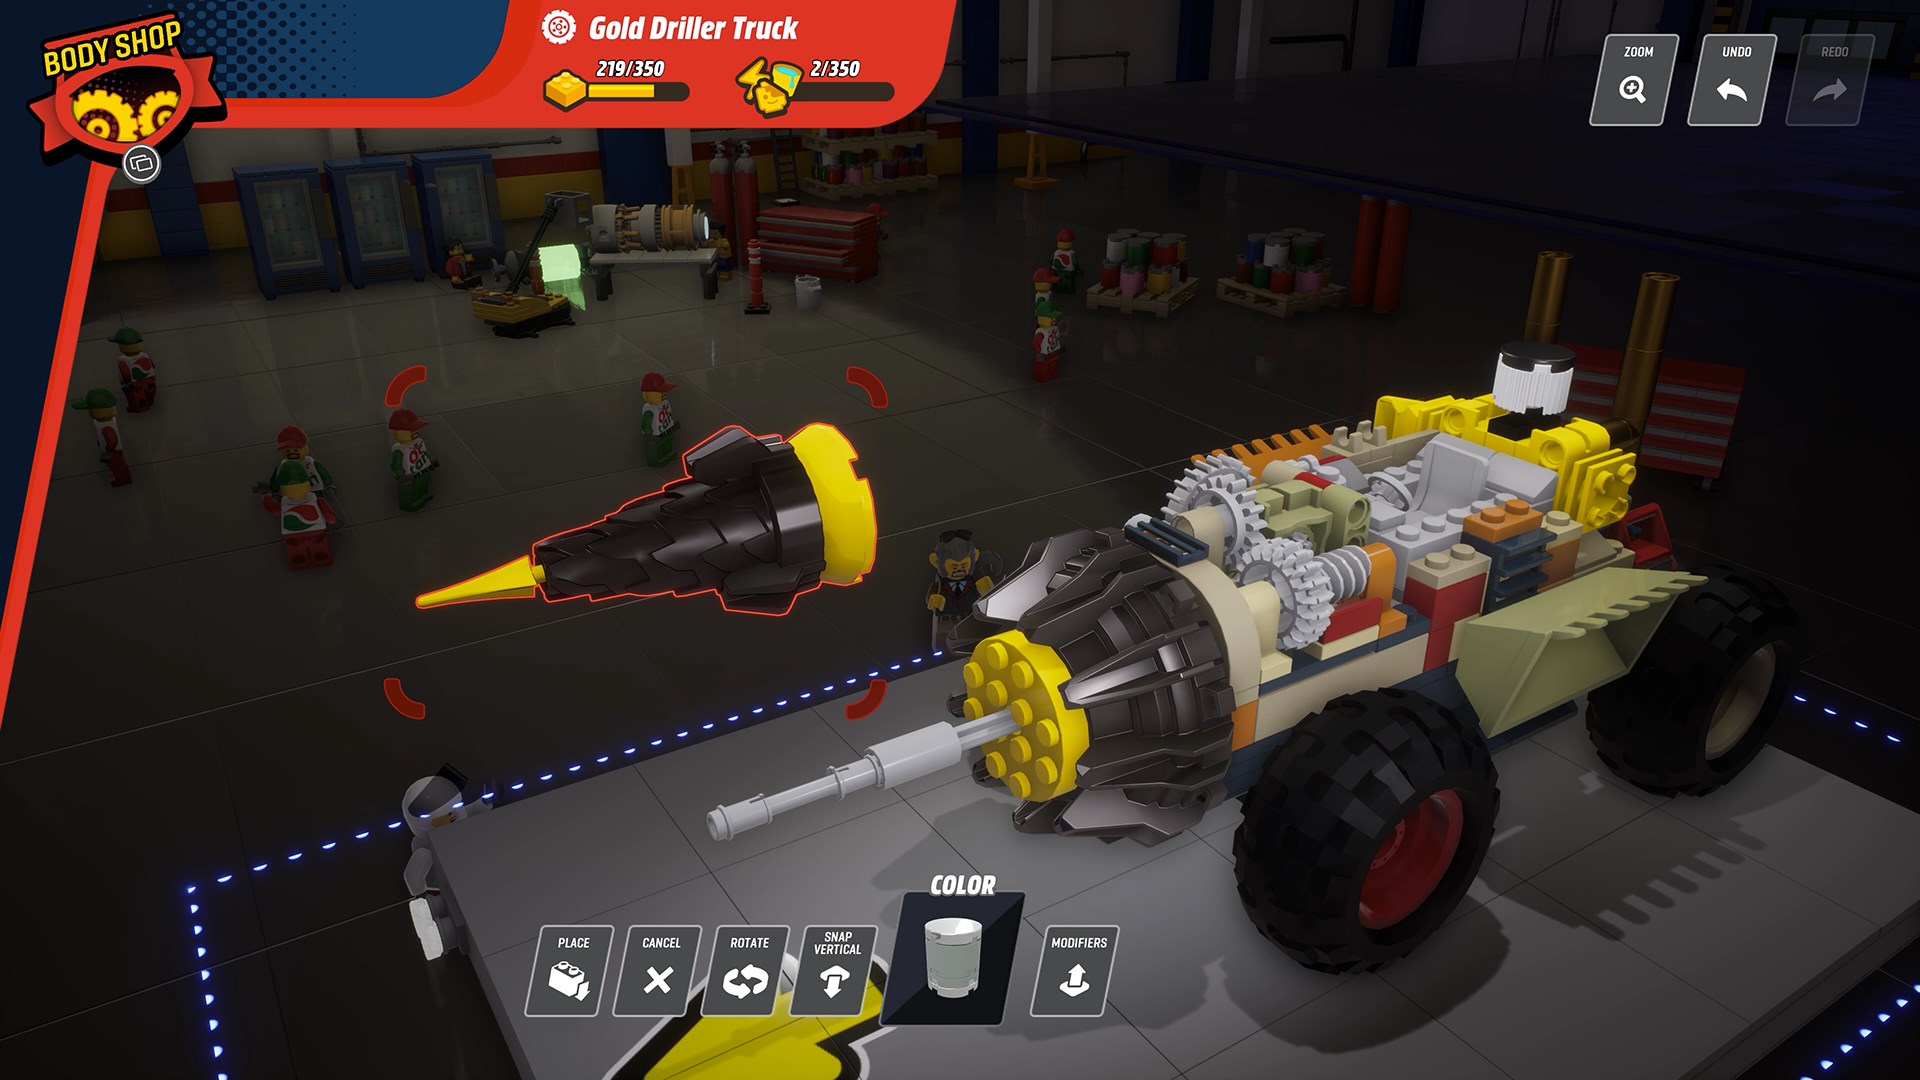 LEGO 2K Drive - Awesome Edition Upgrade DLC EU PS5 CD Key